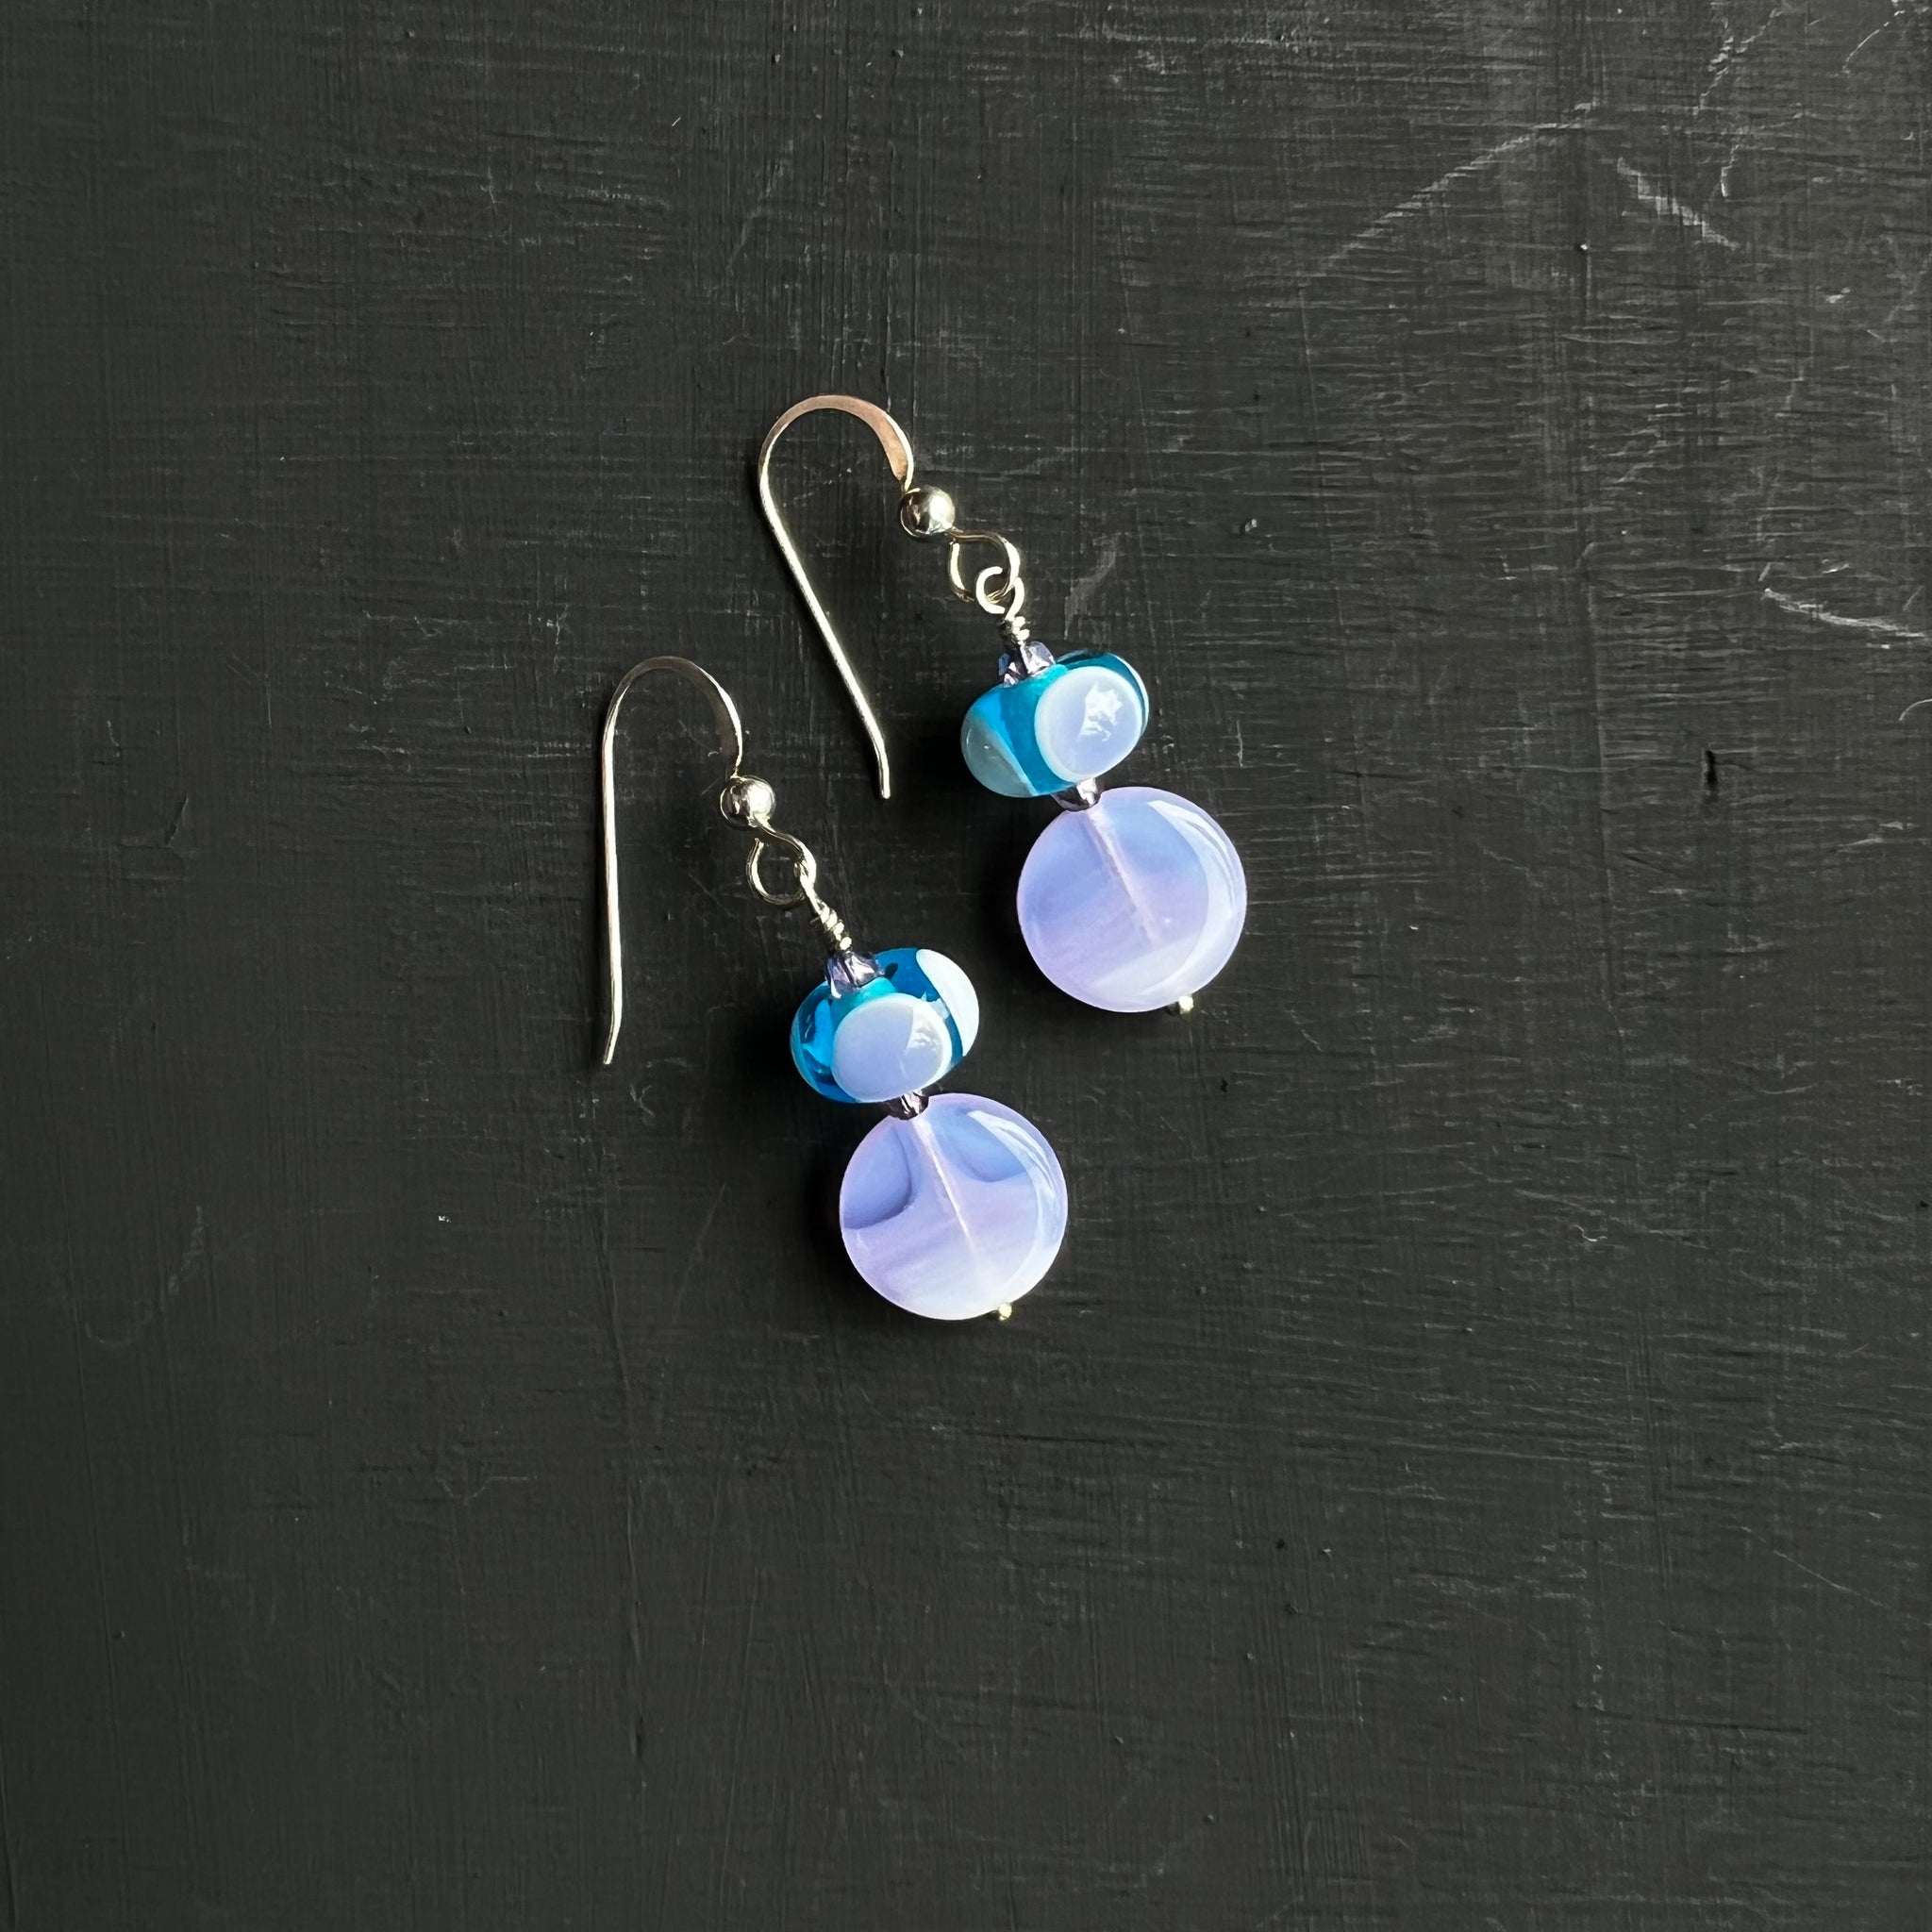 Blue and purple glass earrings